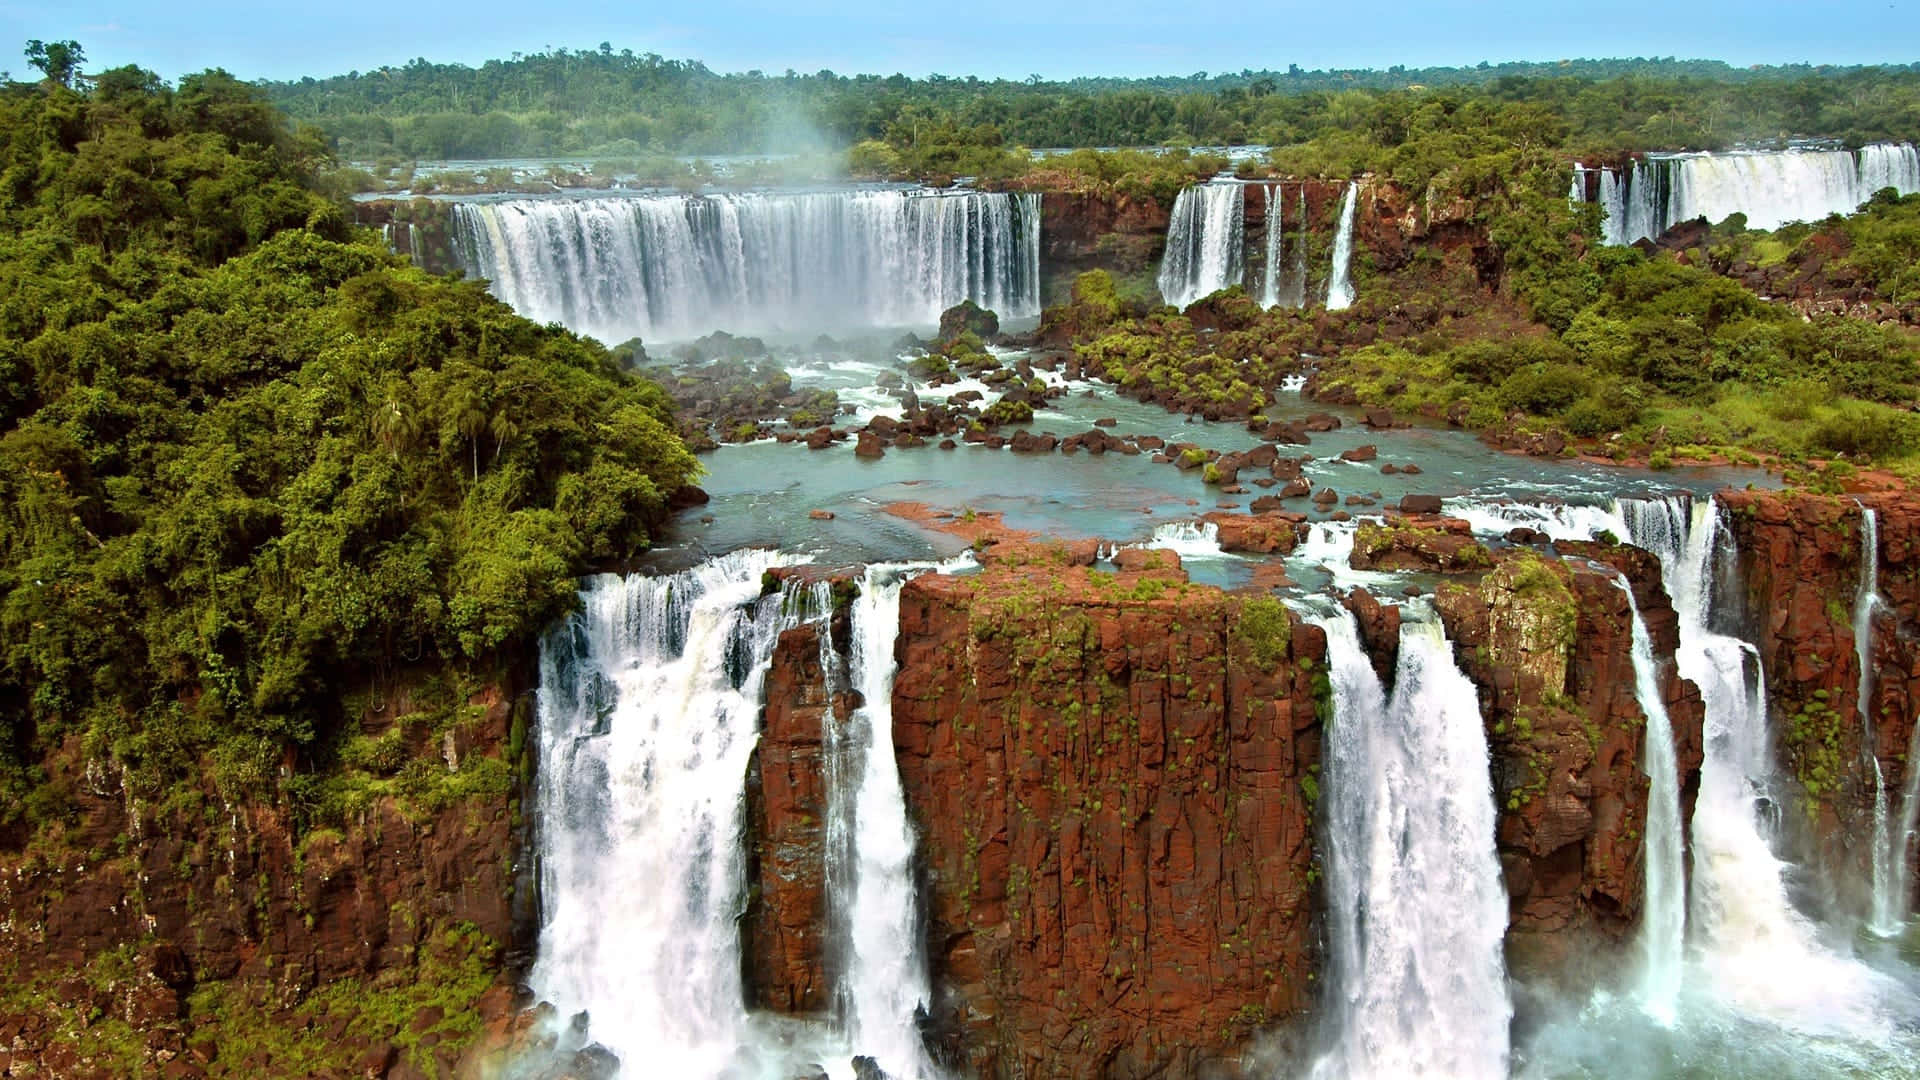 Iguazúfallenfrån Luften. Wallpaper